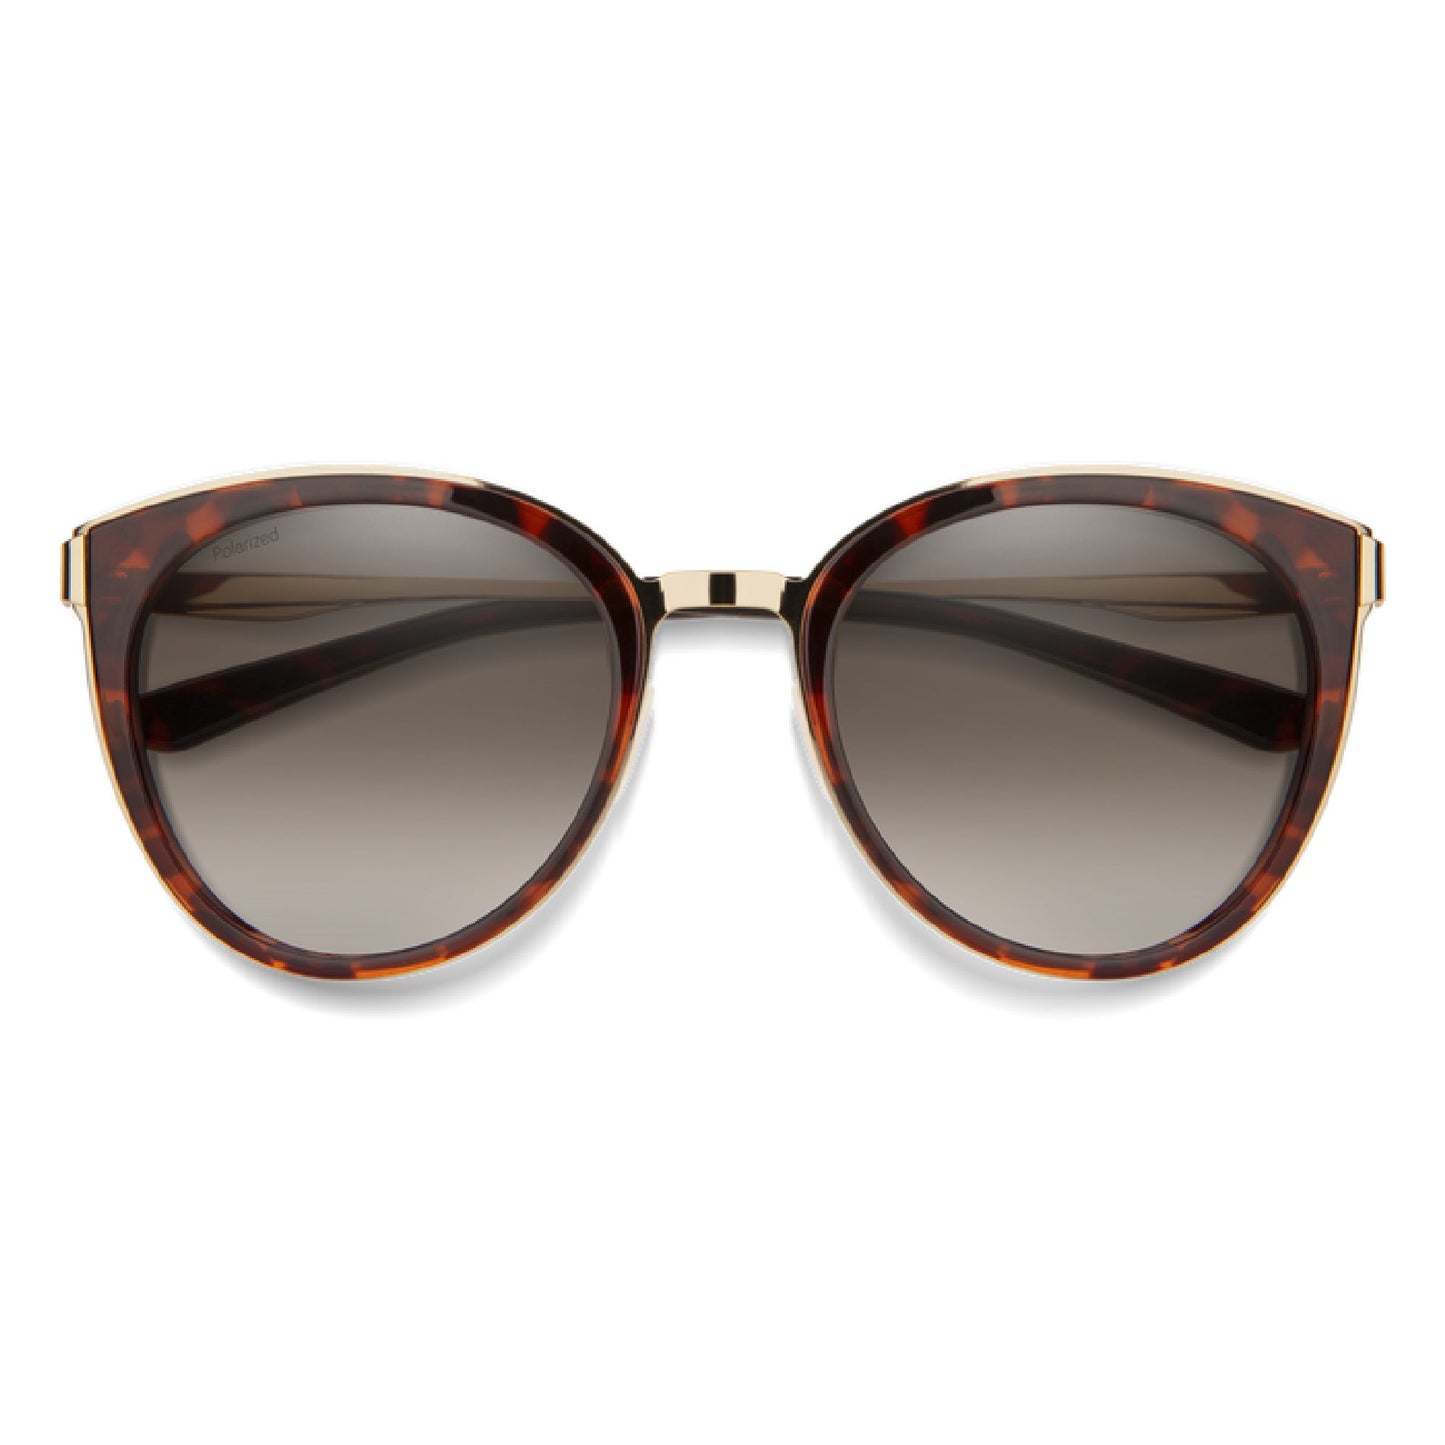 Smith Somerset Sunglasses Tortoise Polarized Brown Gradient Lens Sunglasses